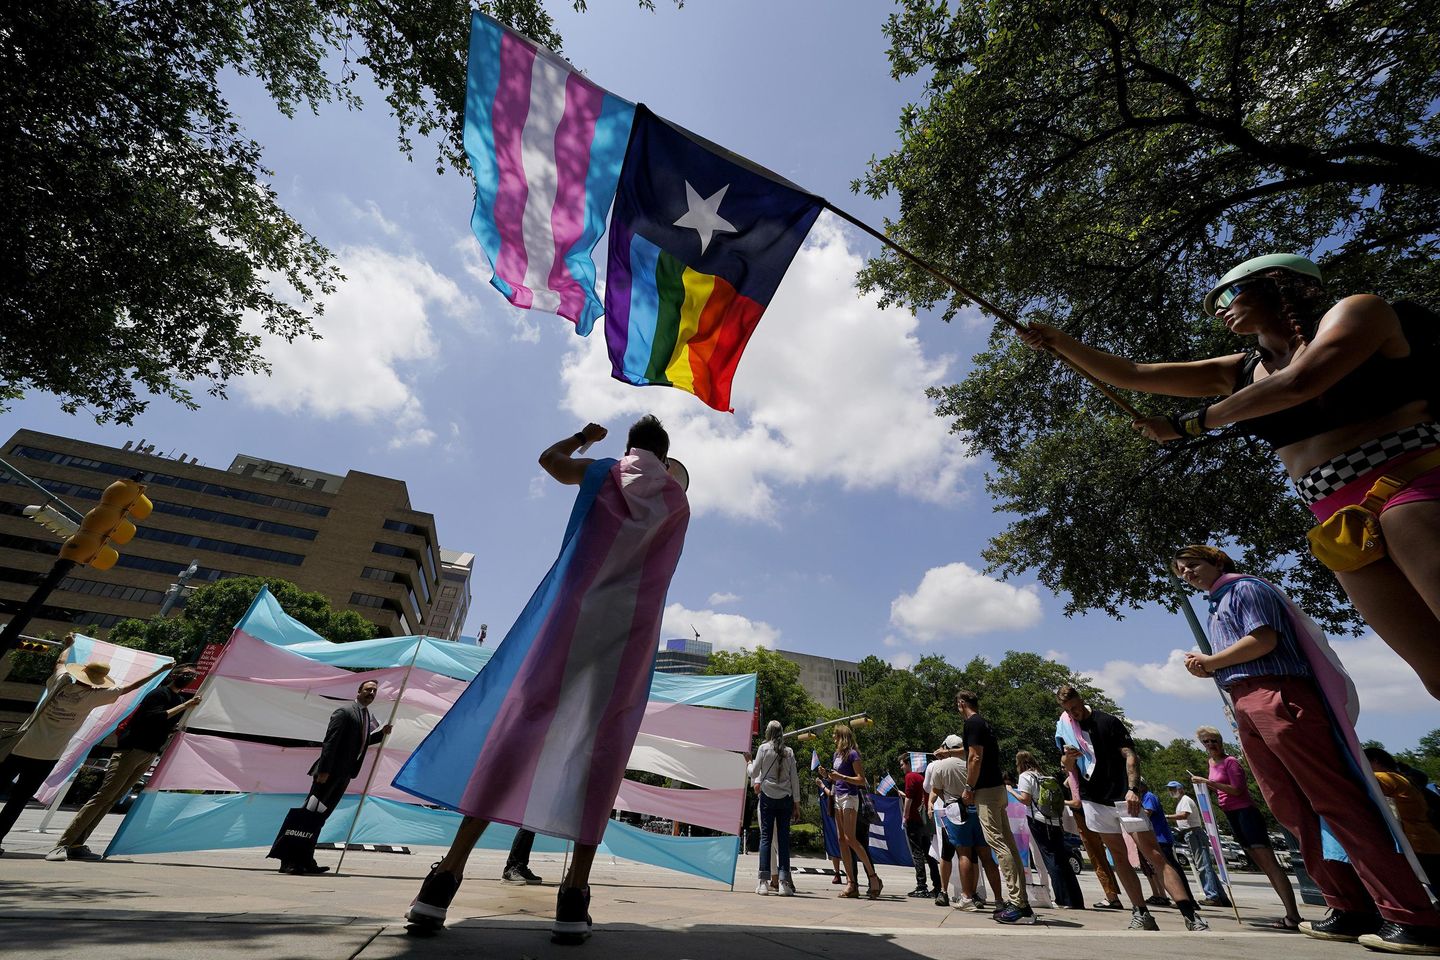 Texas on track to enforce ban on gender-transition drugs for minors despite judge's order